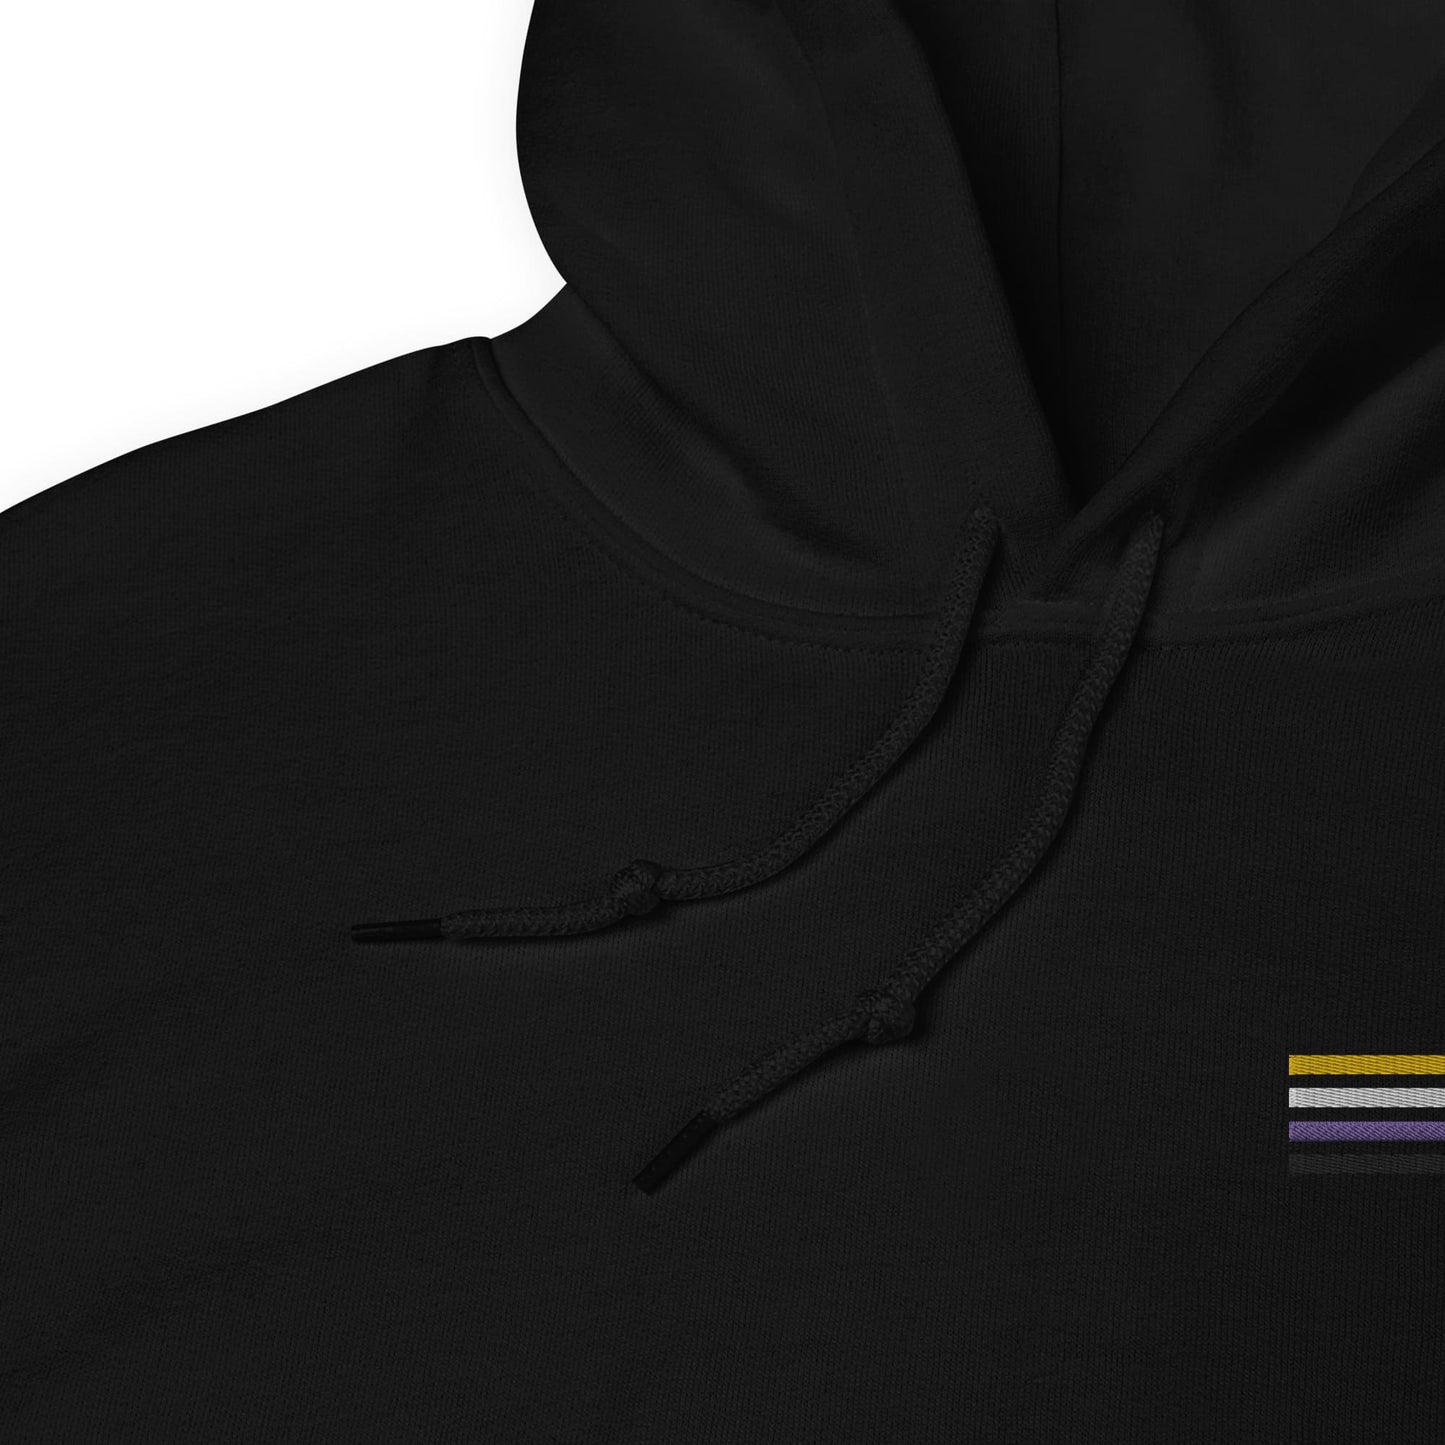 nonbinary hoodie, subtle enby pride flag embroidered pocket design hooded sweatshirt, strings